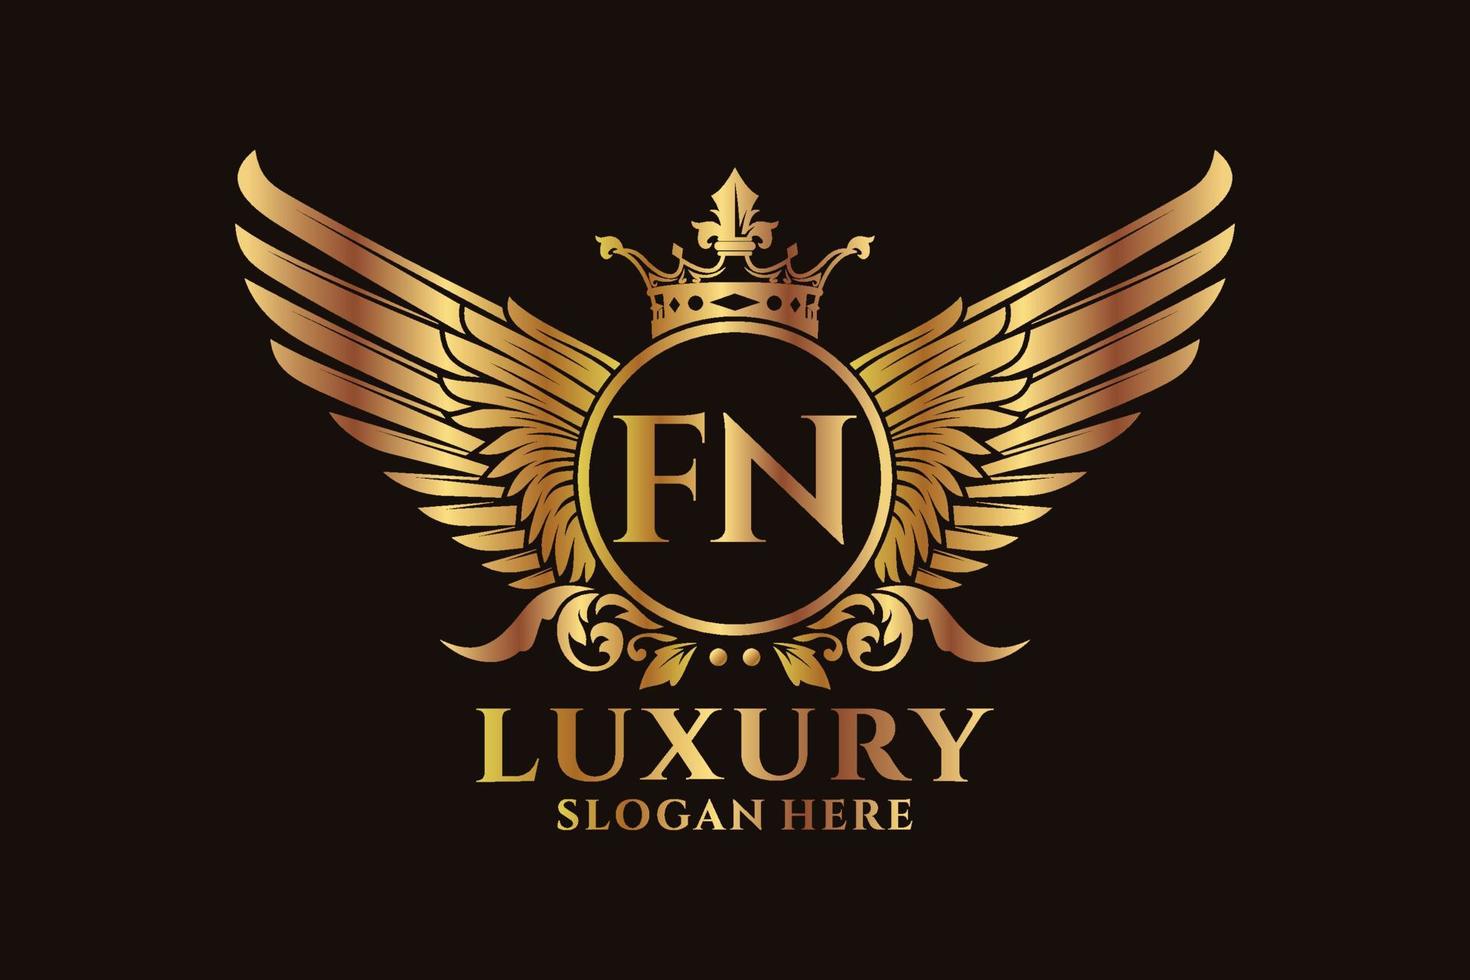 luxe Koninklijk vleugel brief fn kam goud kleur logo vector, zege logo, kam logo, vleugel logo, vector logo sjabloon.